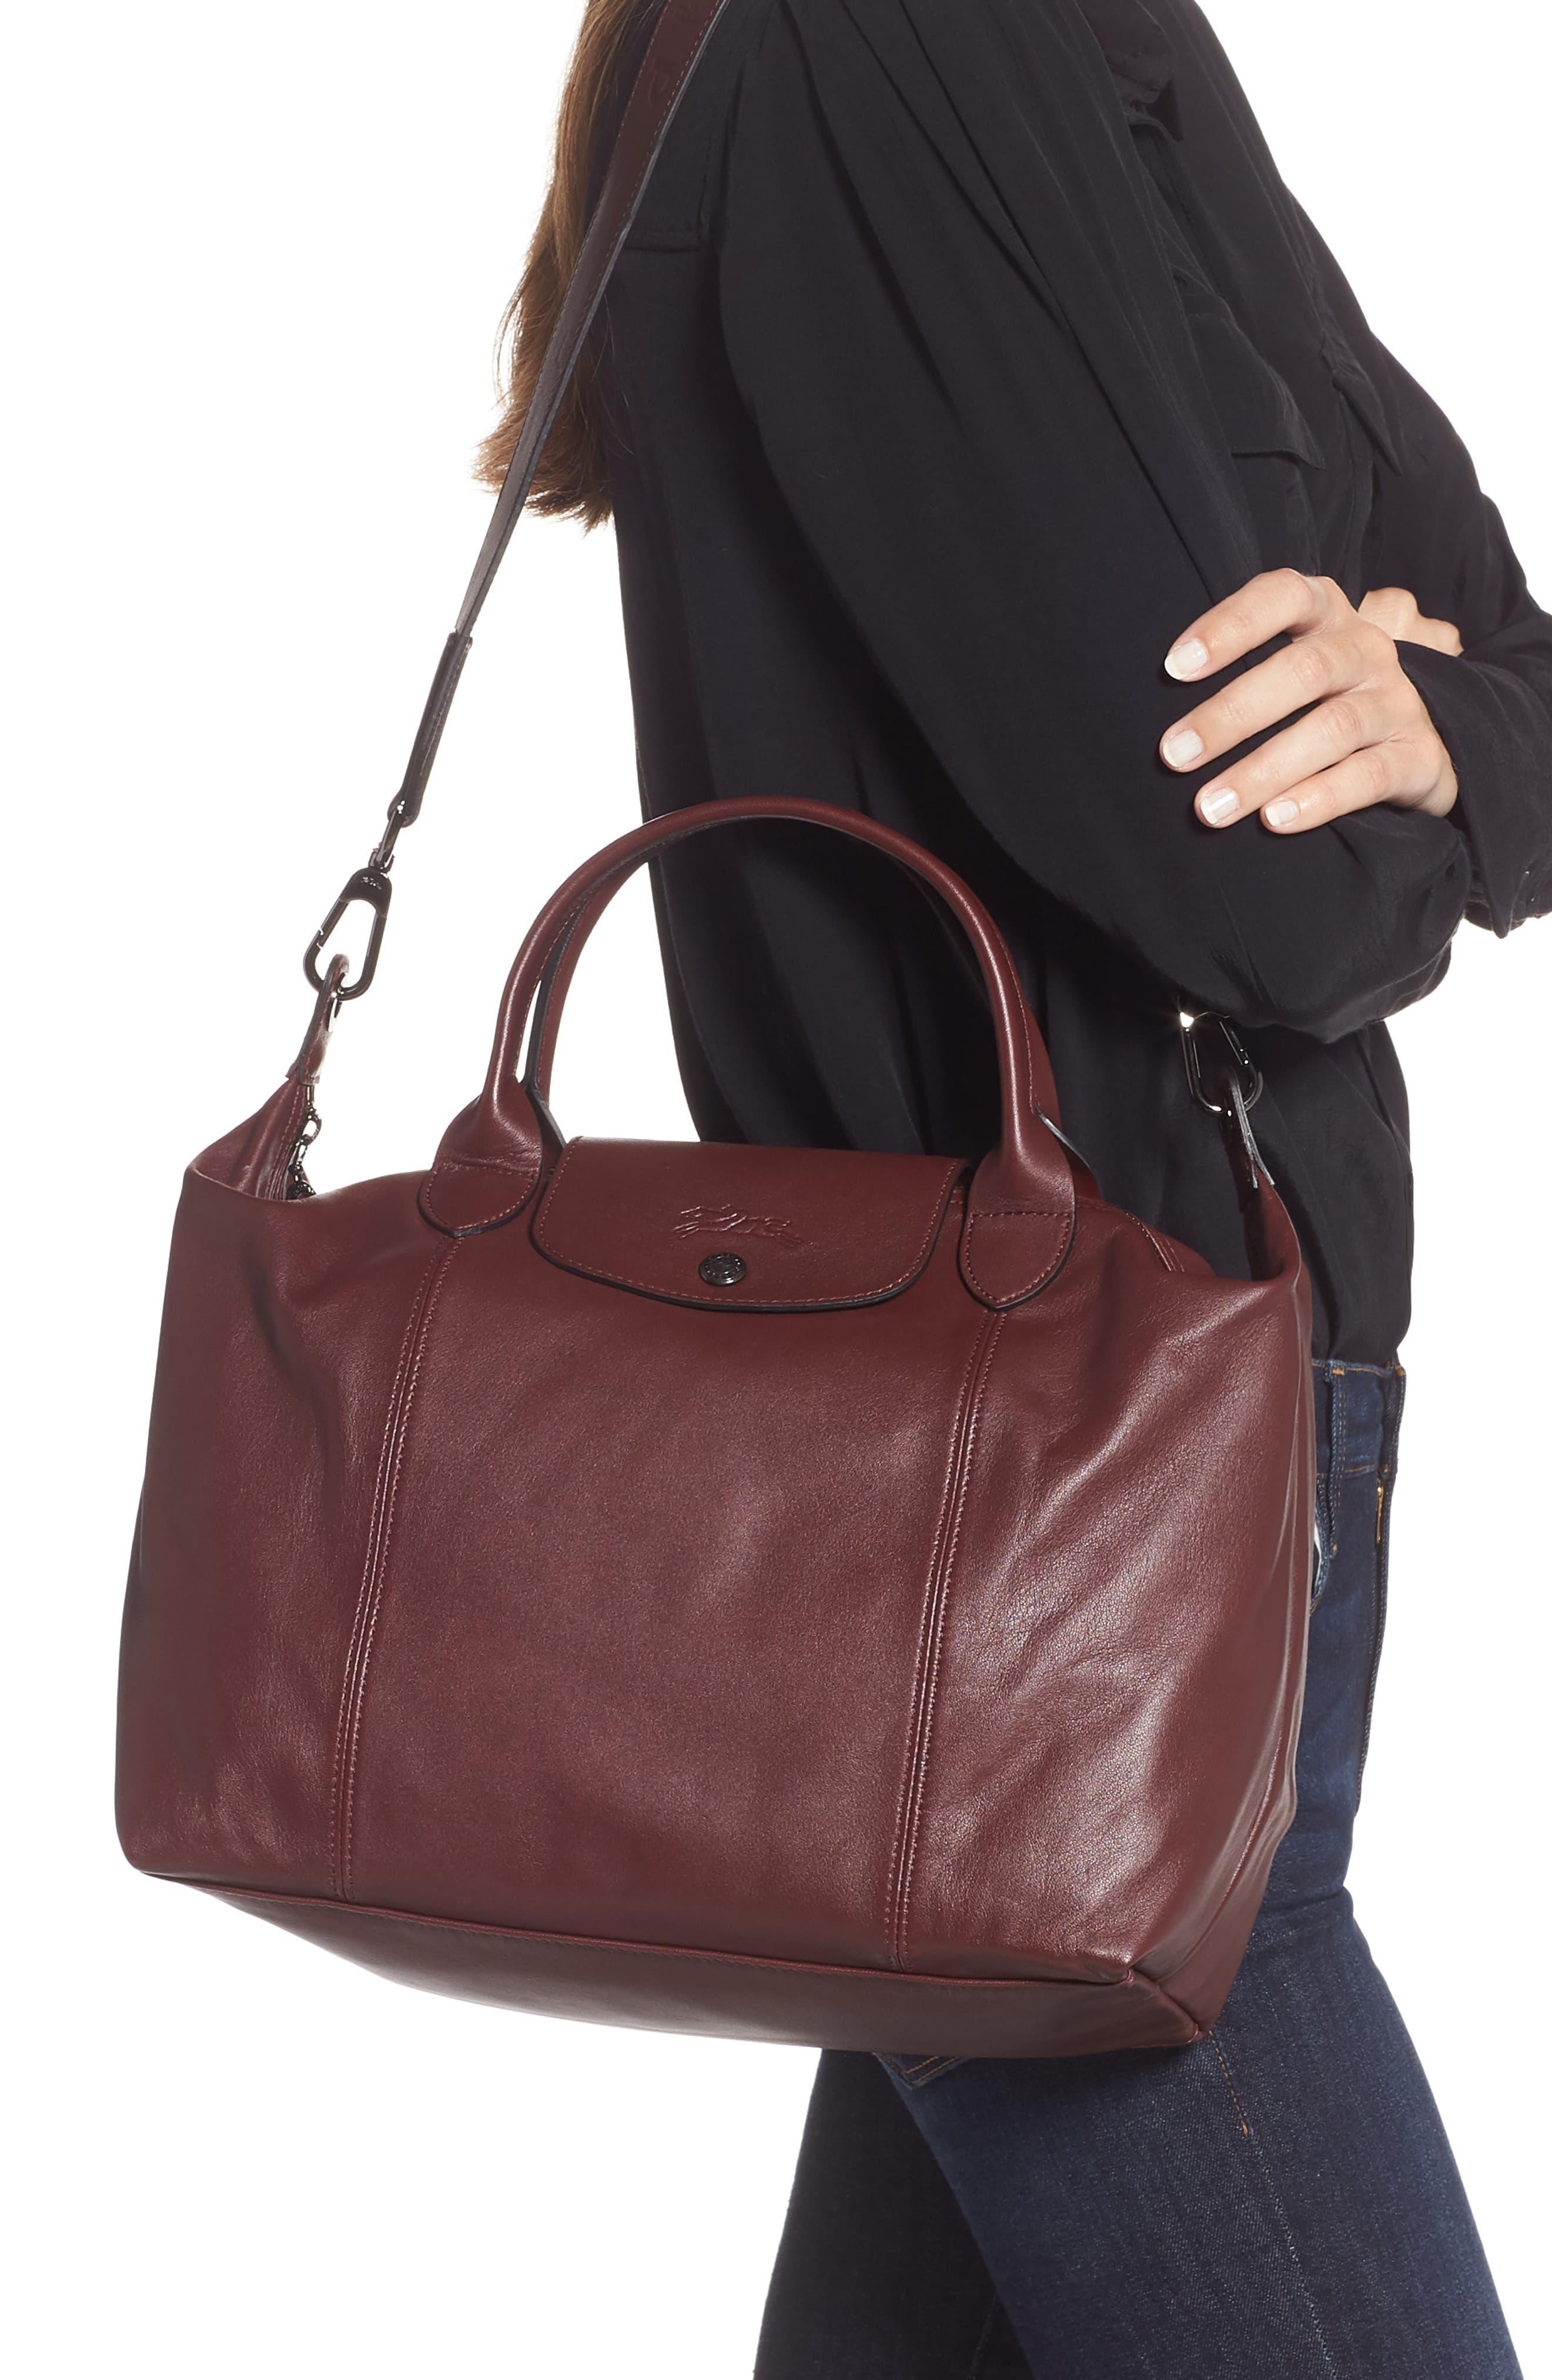 maroon longchamp bag